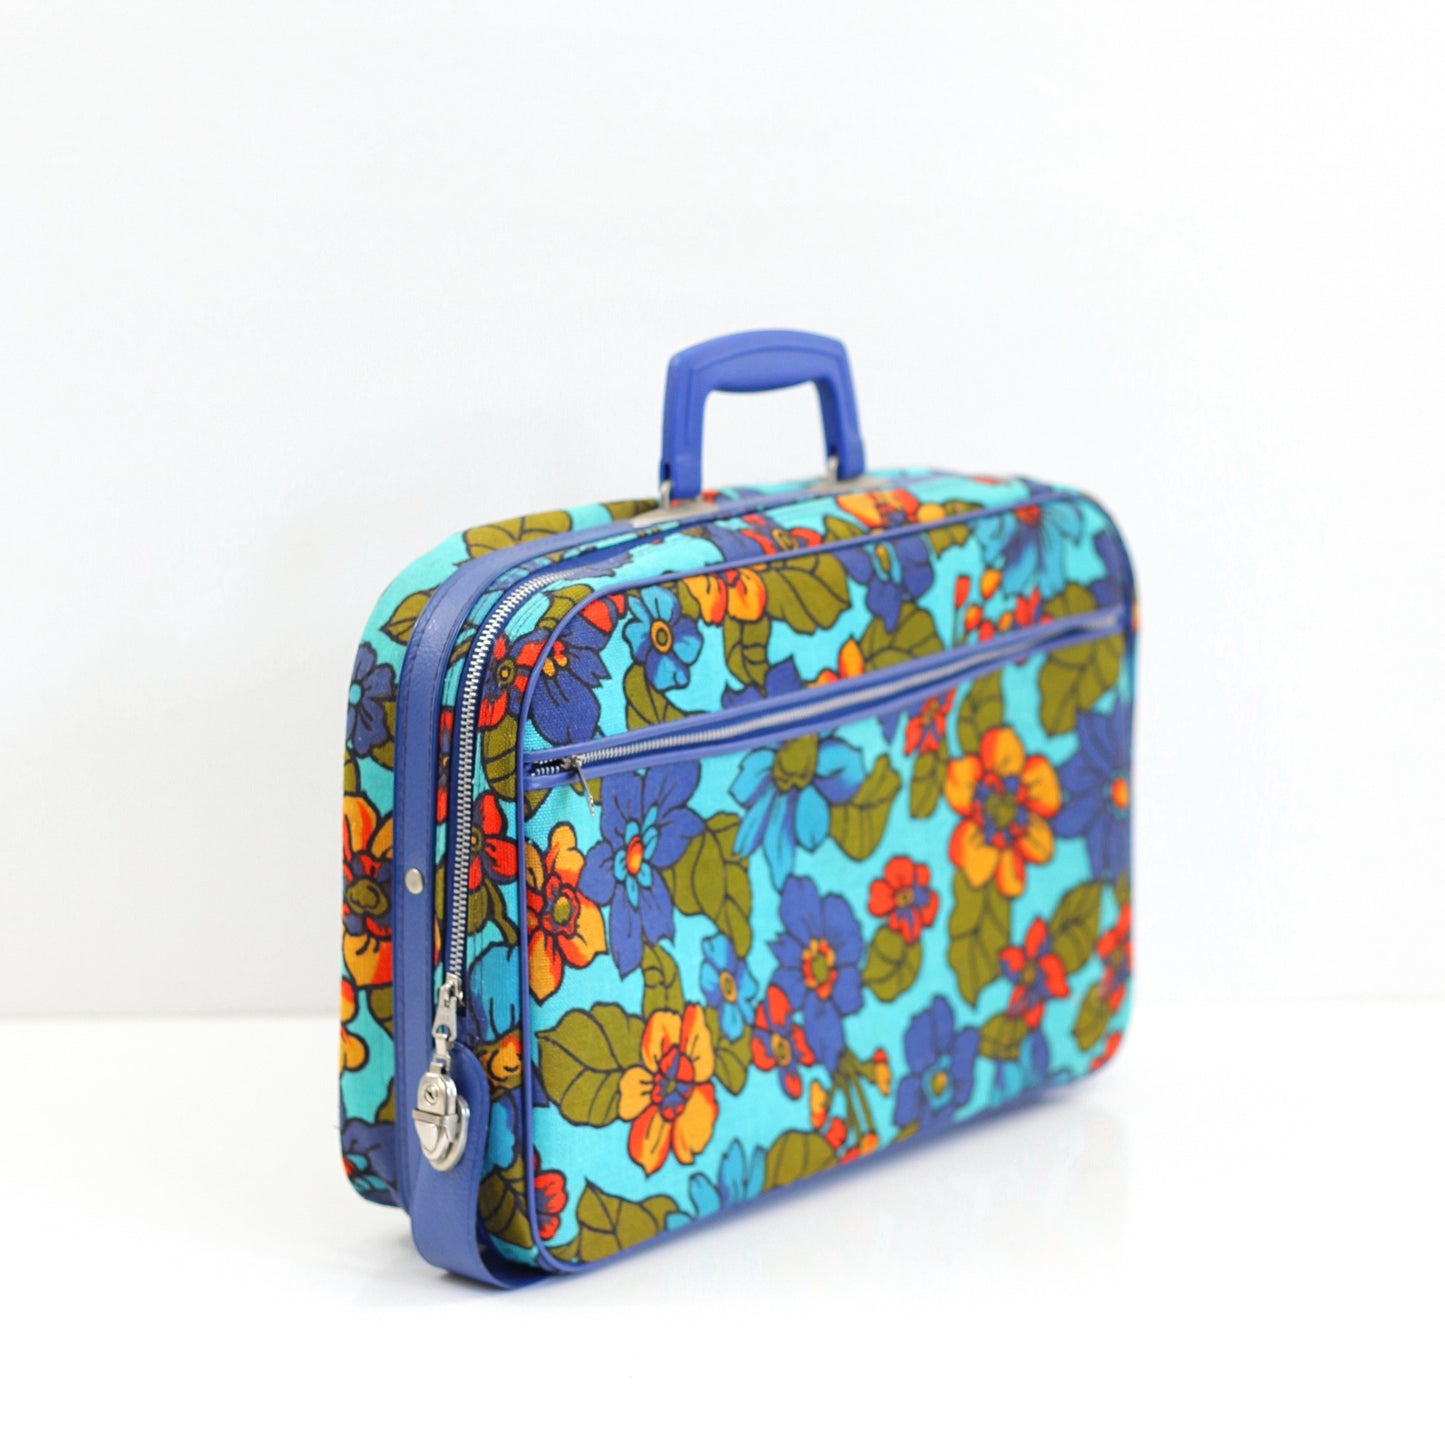 SOLD - Vintage Mod Blue Floral Suitcase